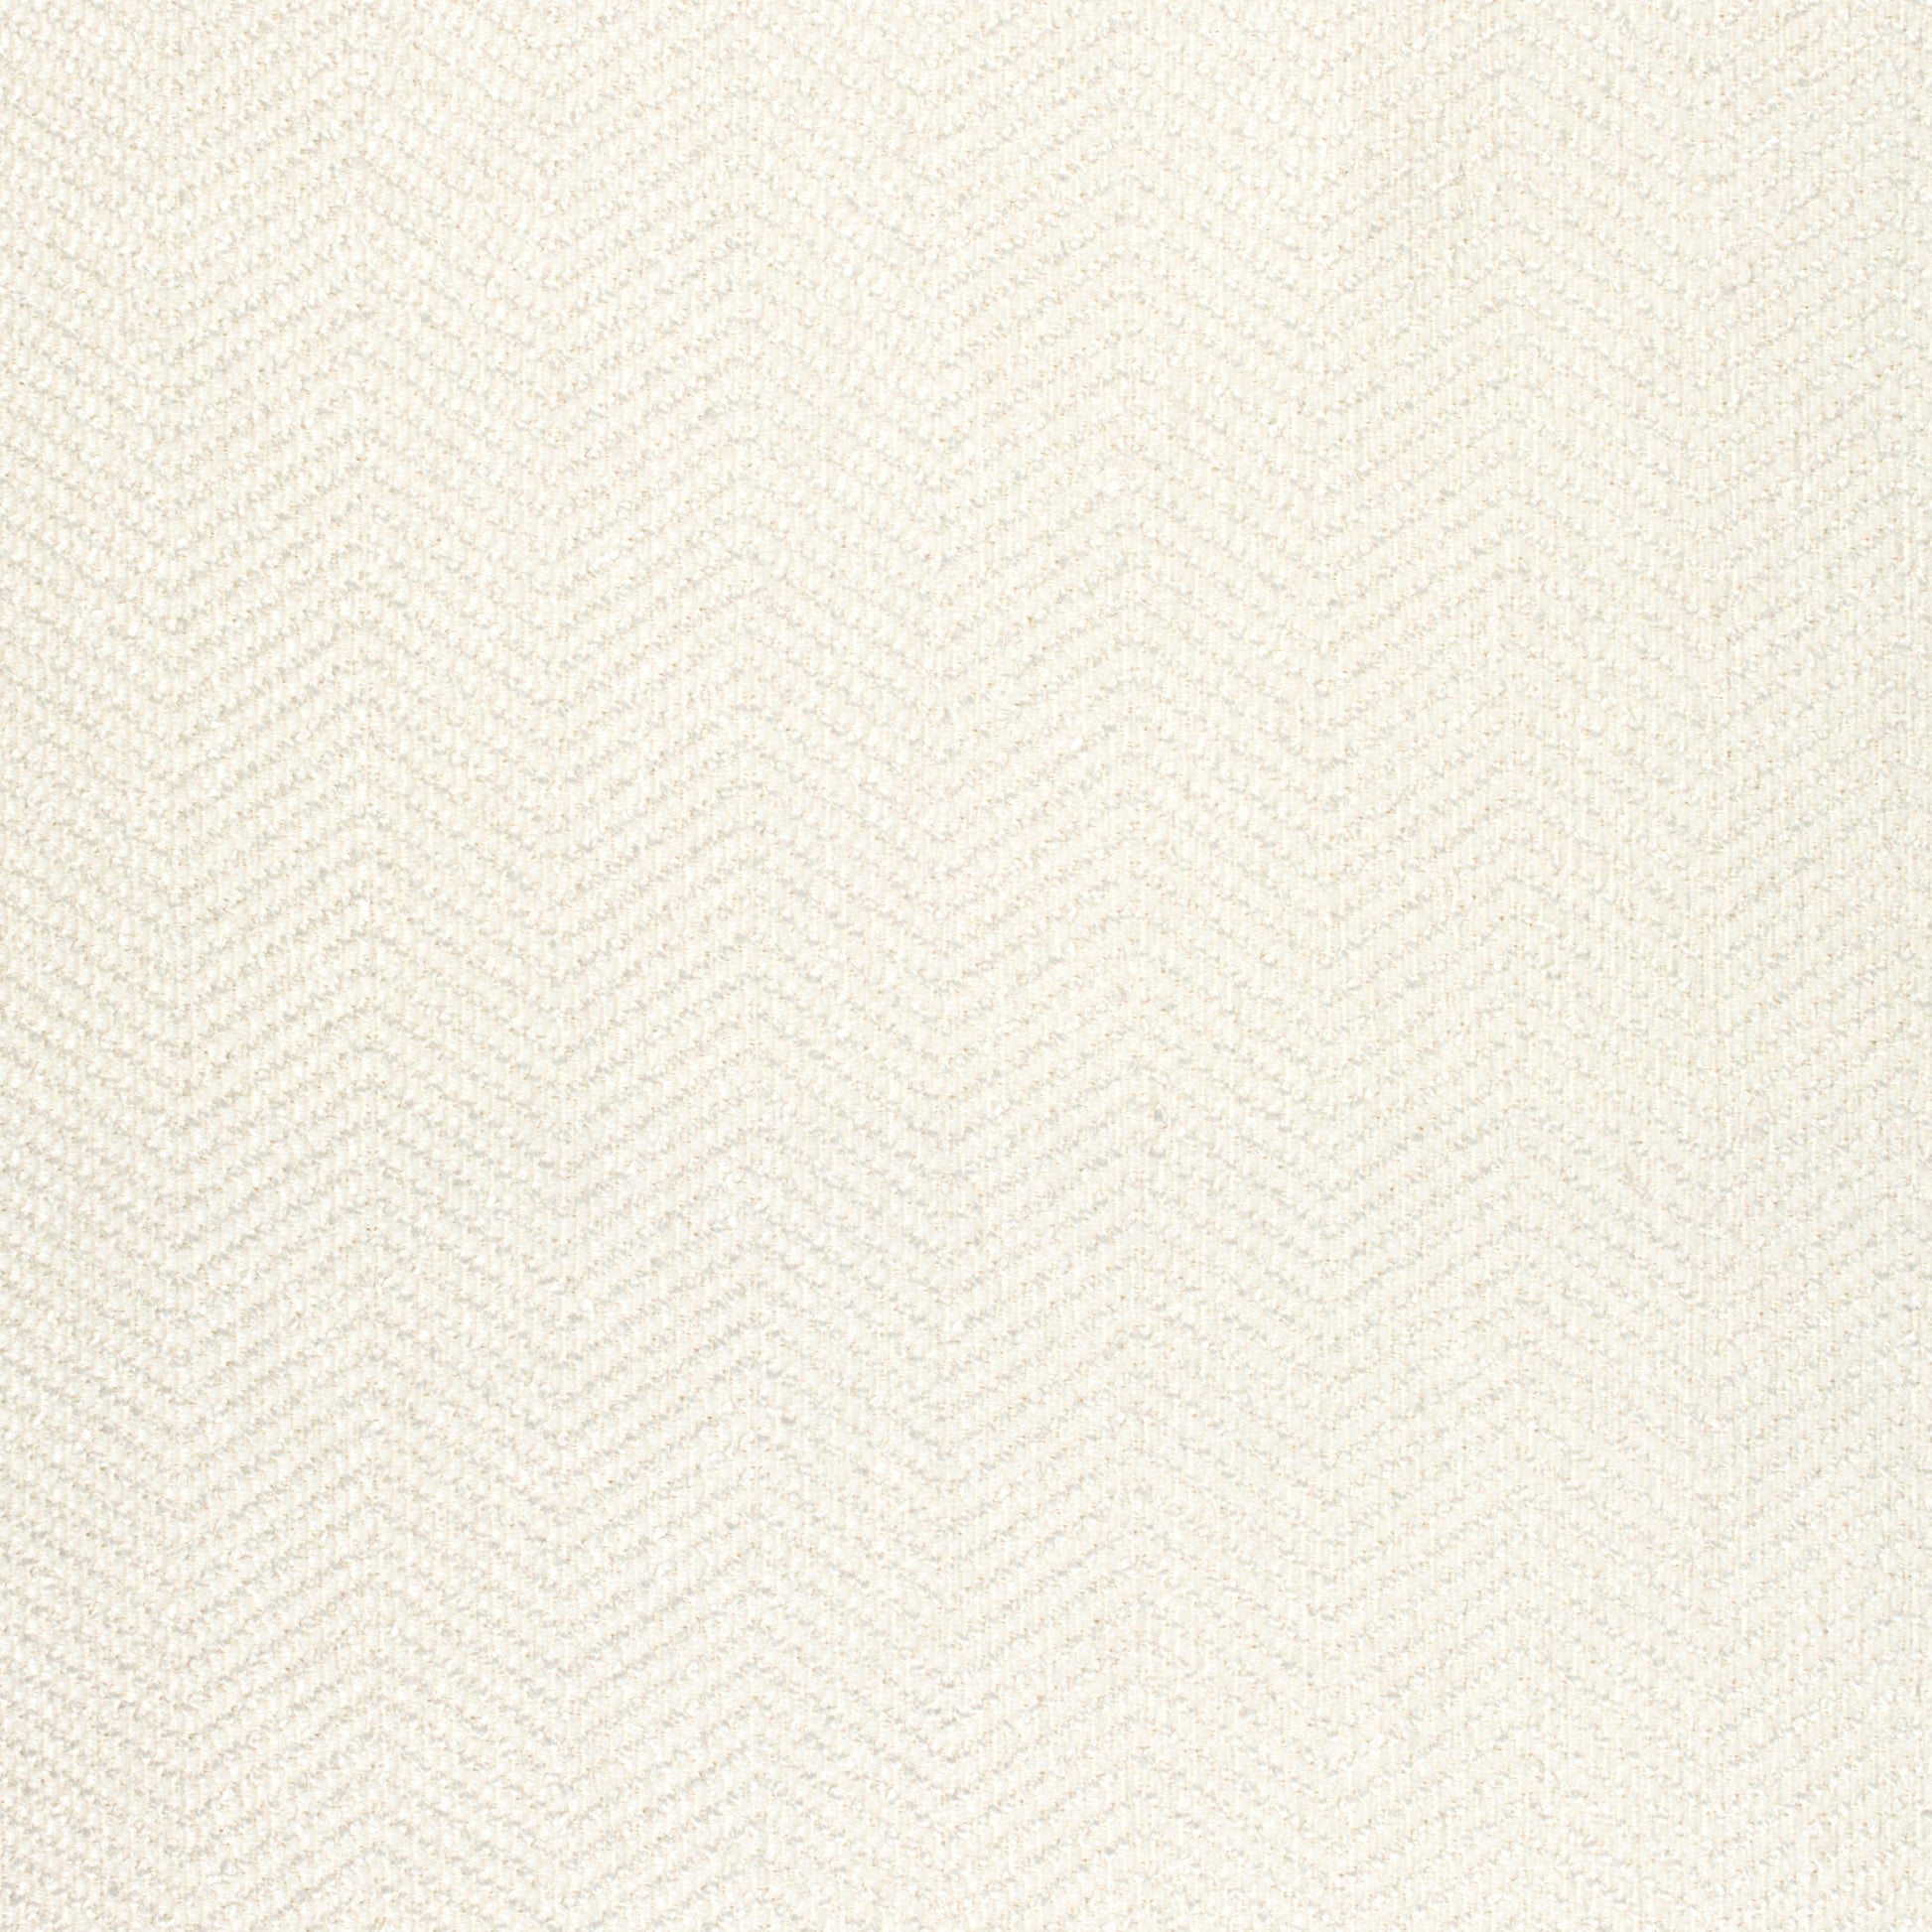 Purchase Thibaut Fabric Pattern number W80621 pattern name Dalton Herringbone color Ivory